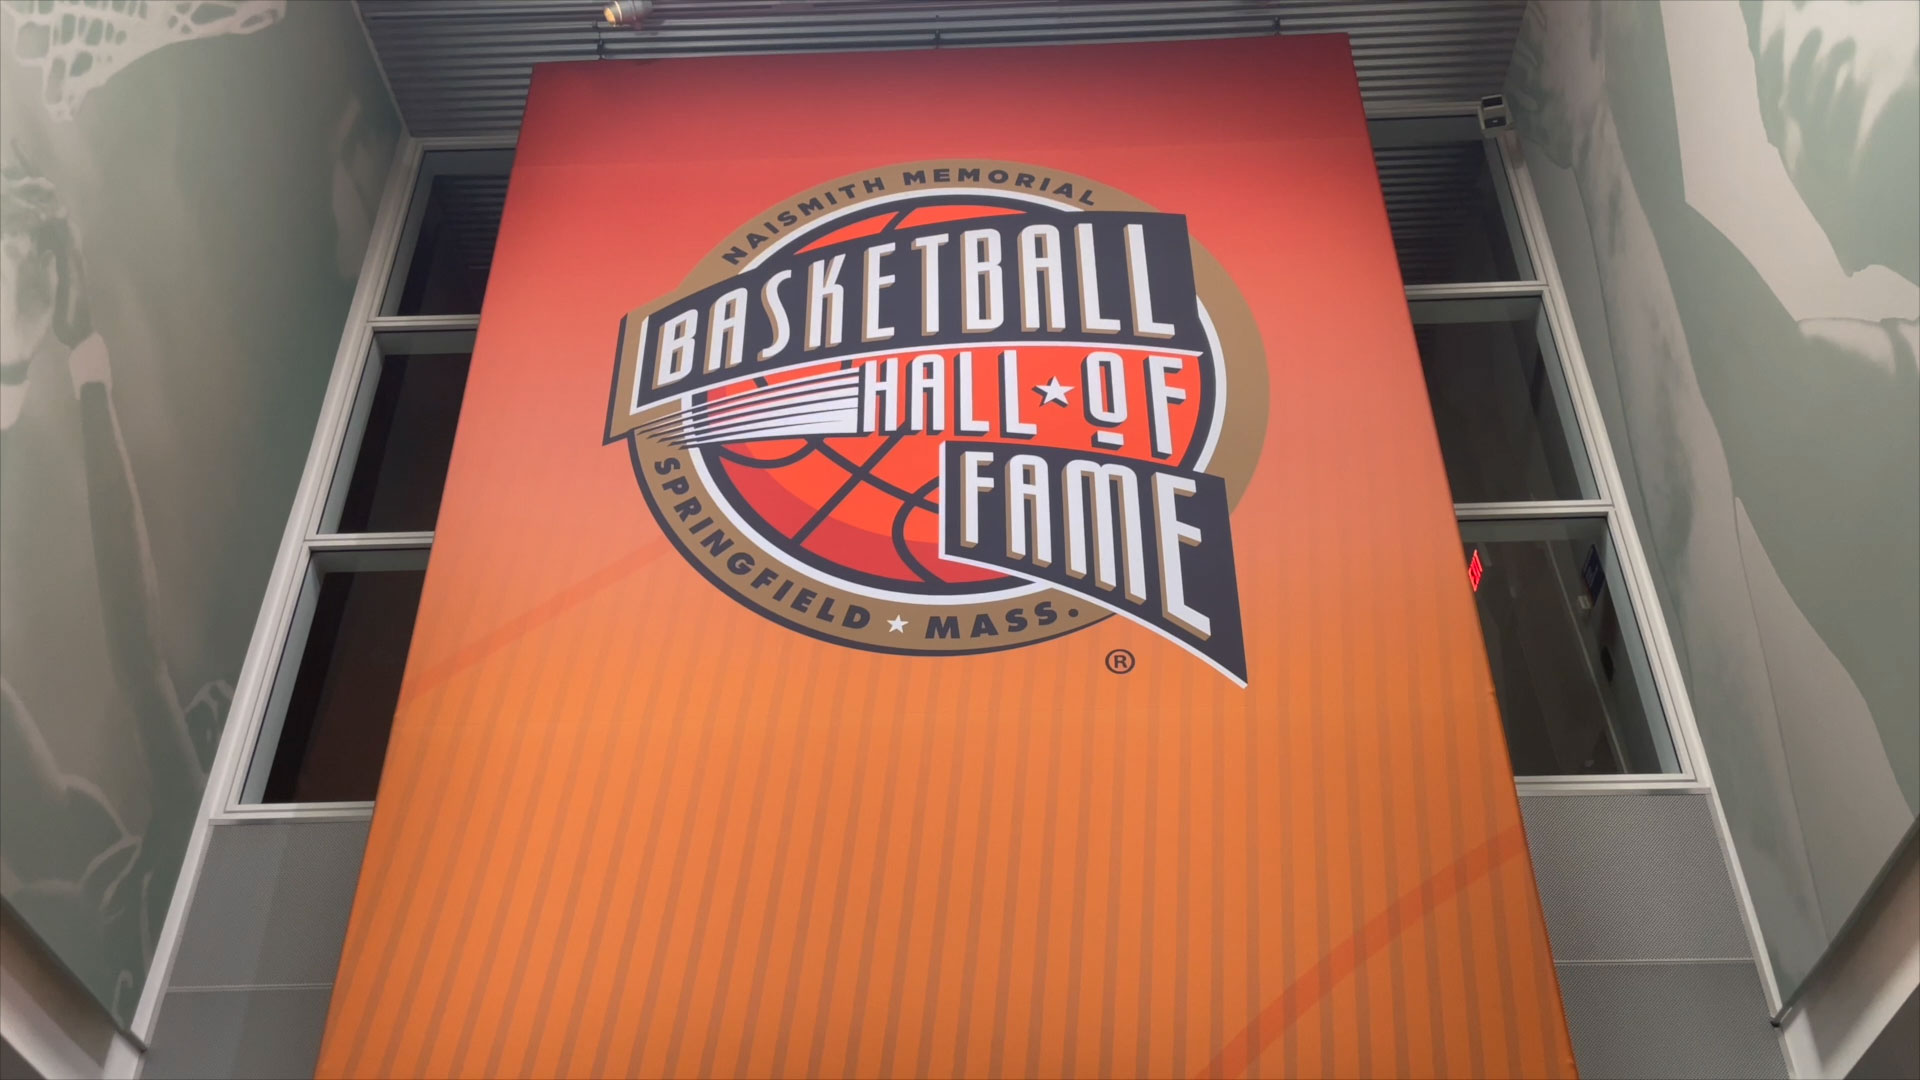 Naismith Memorial Basketball Hall of Fame Explore Western Mass